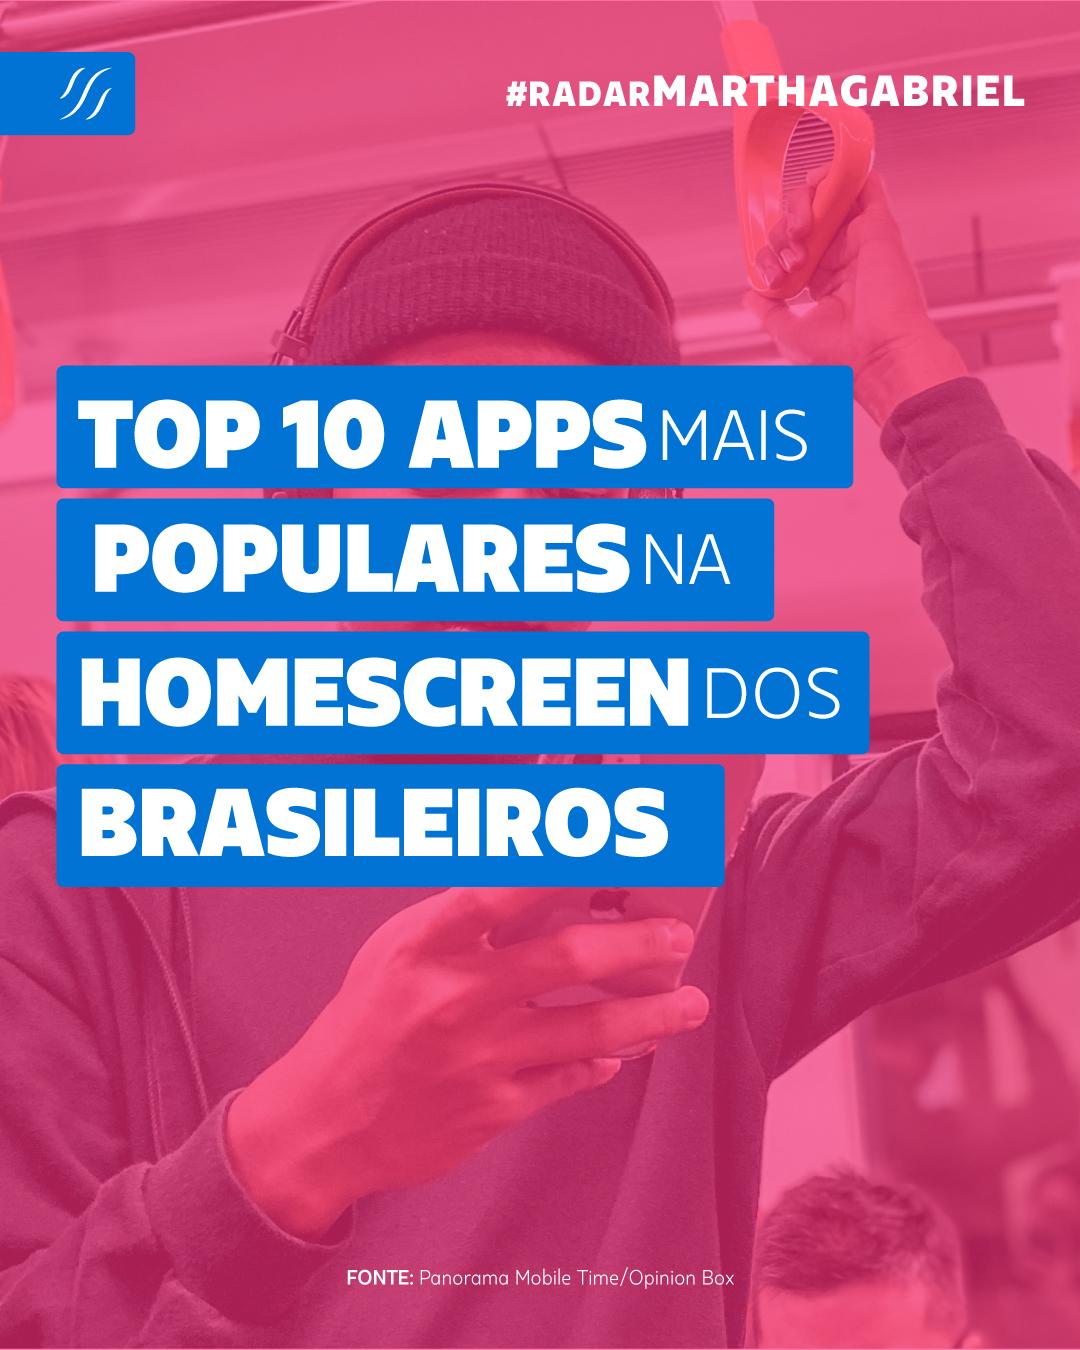 Top 10 Apps mais populares na home screen dos brasileiros